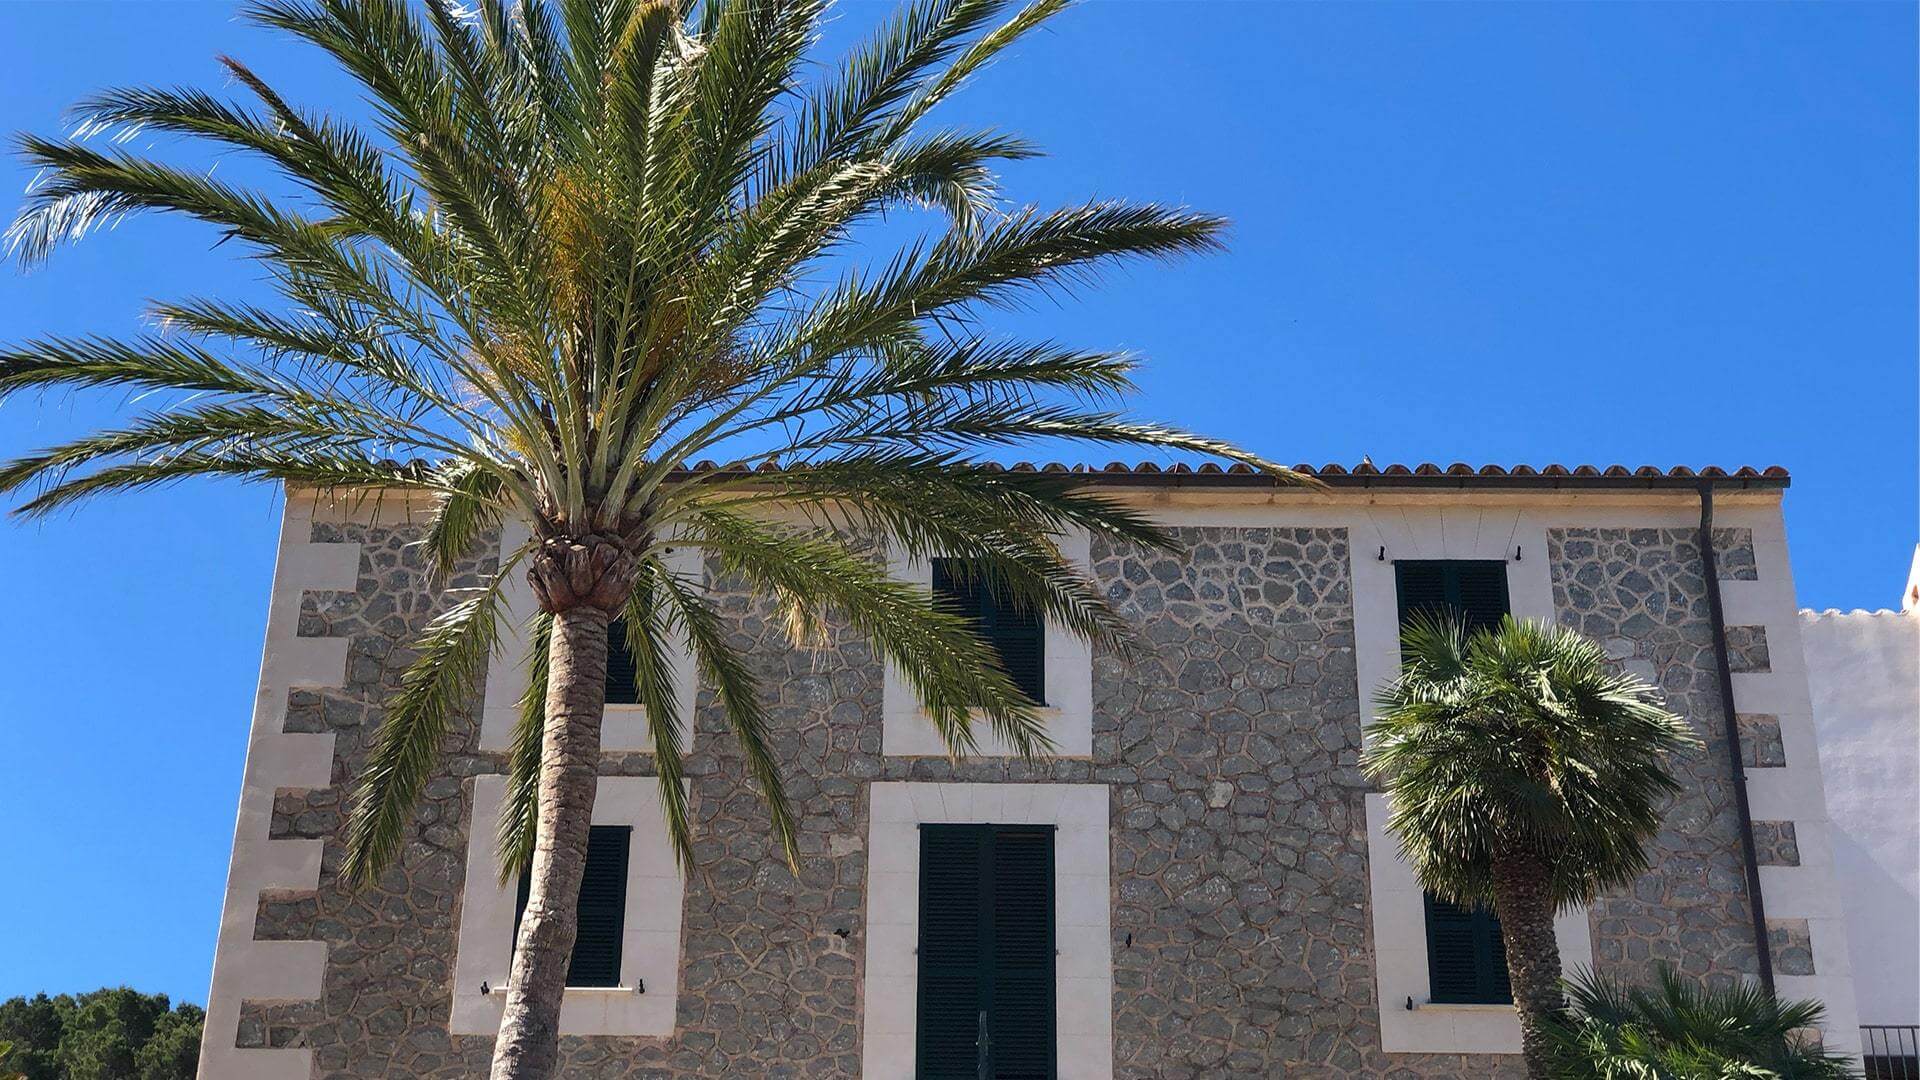 Banyalbufar house with palmtree photo Adele Chretien min